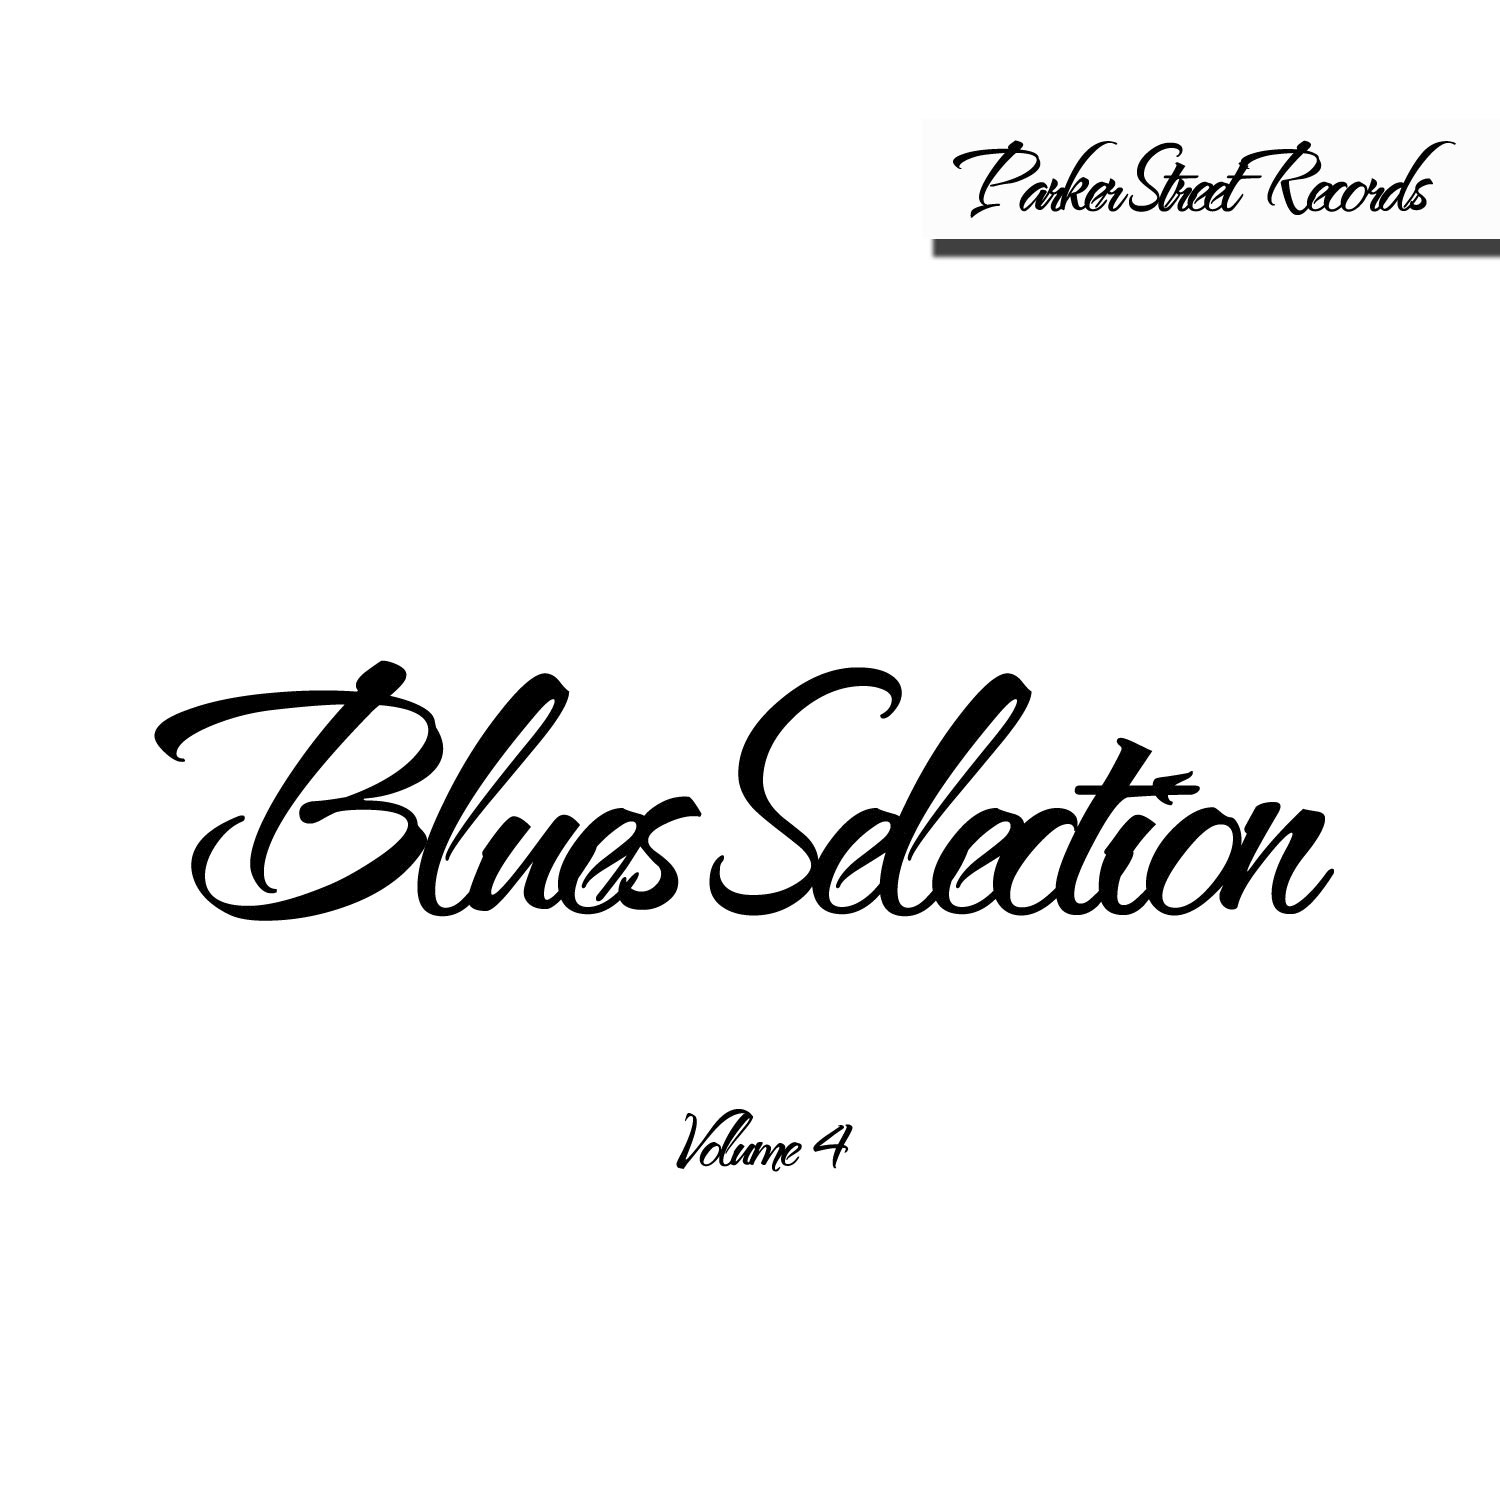 Blues Selection, Vol. 4